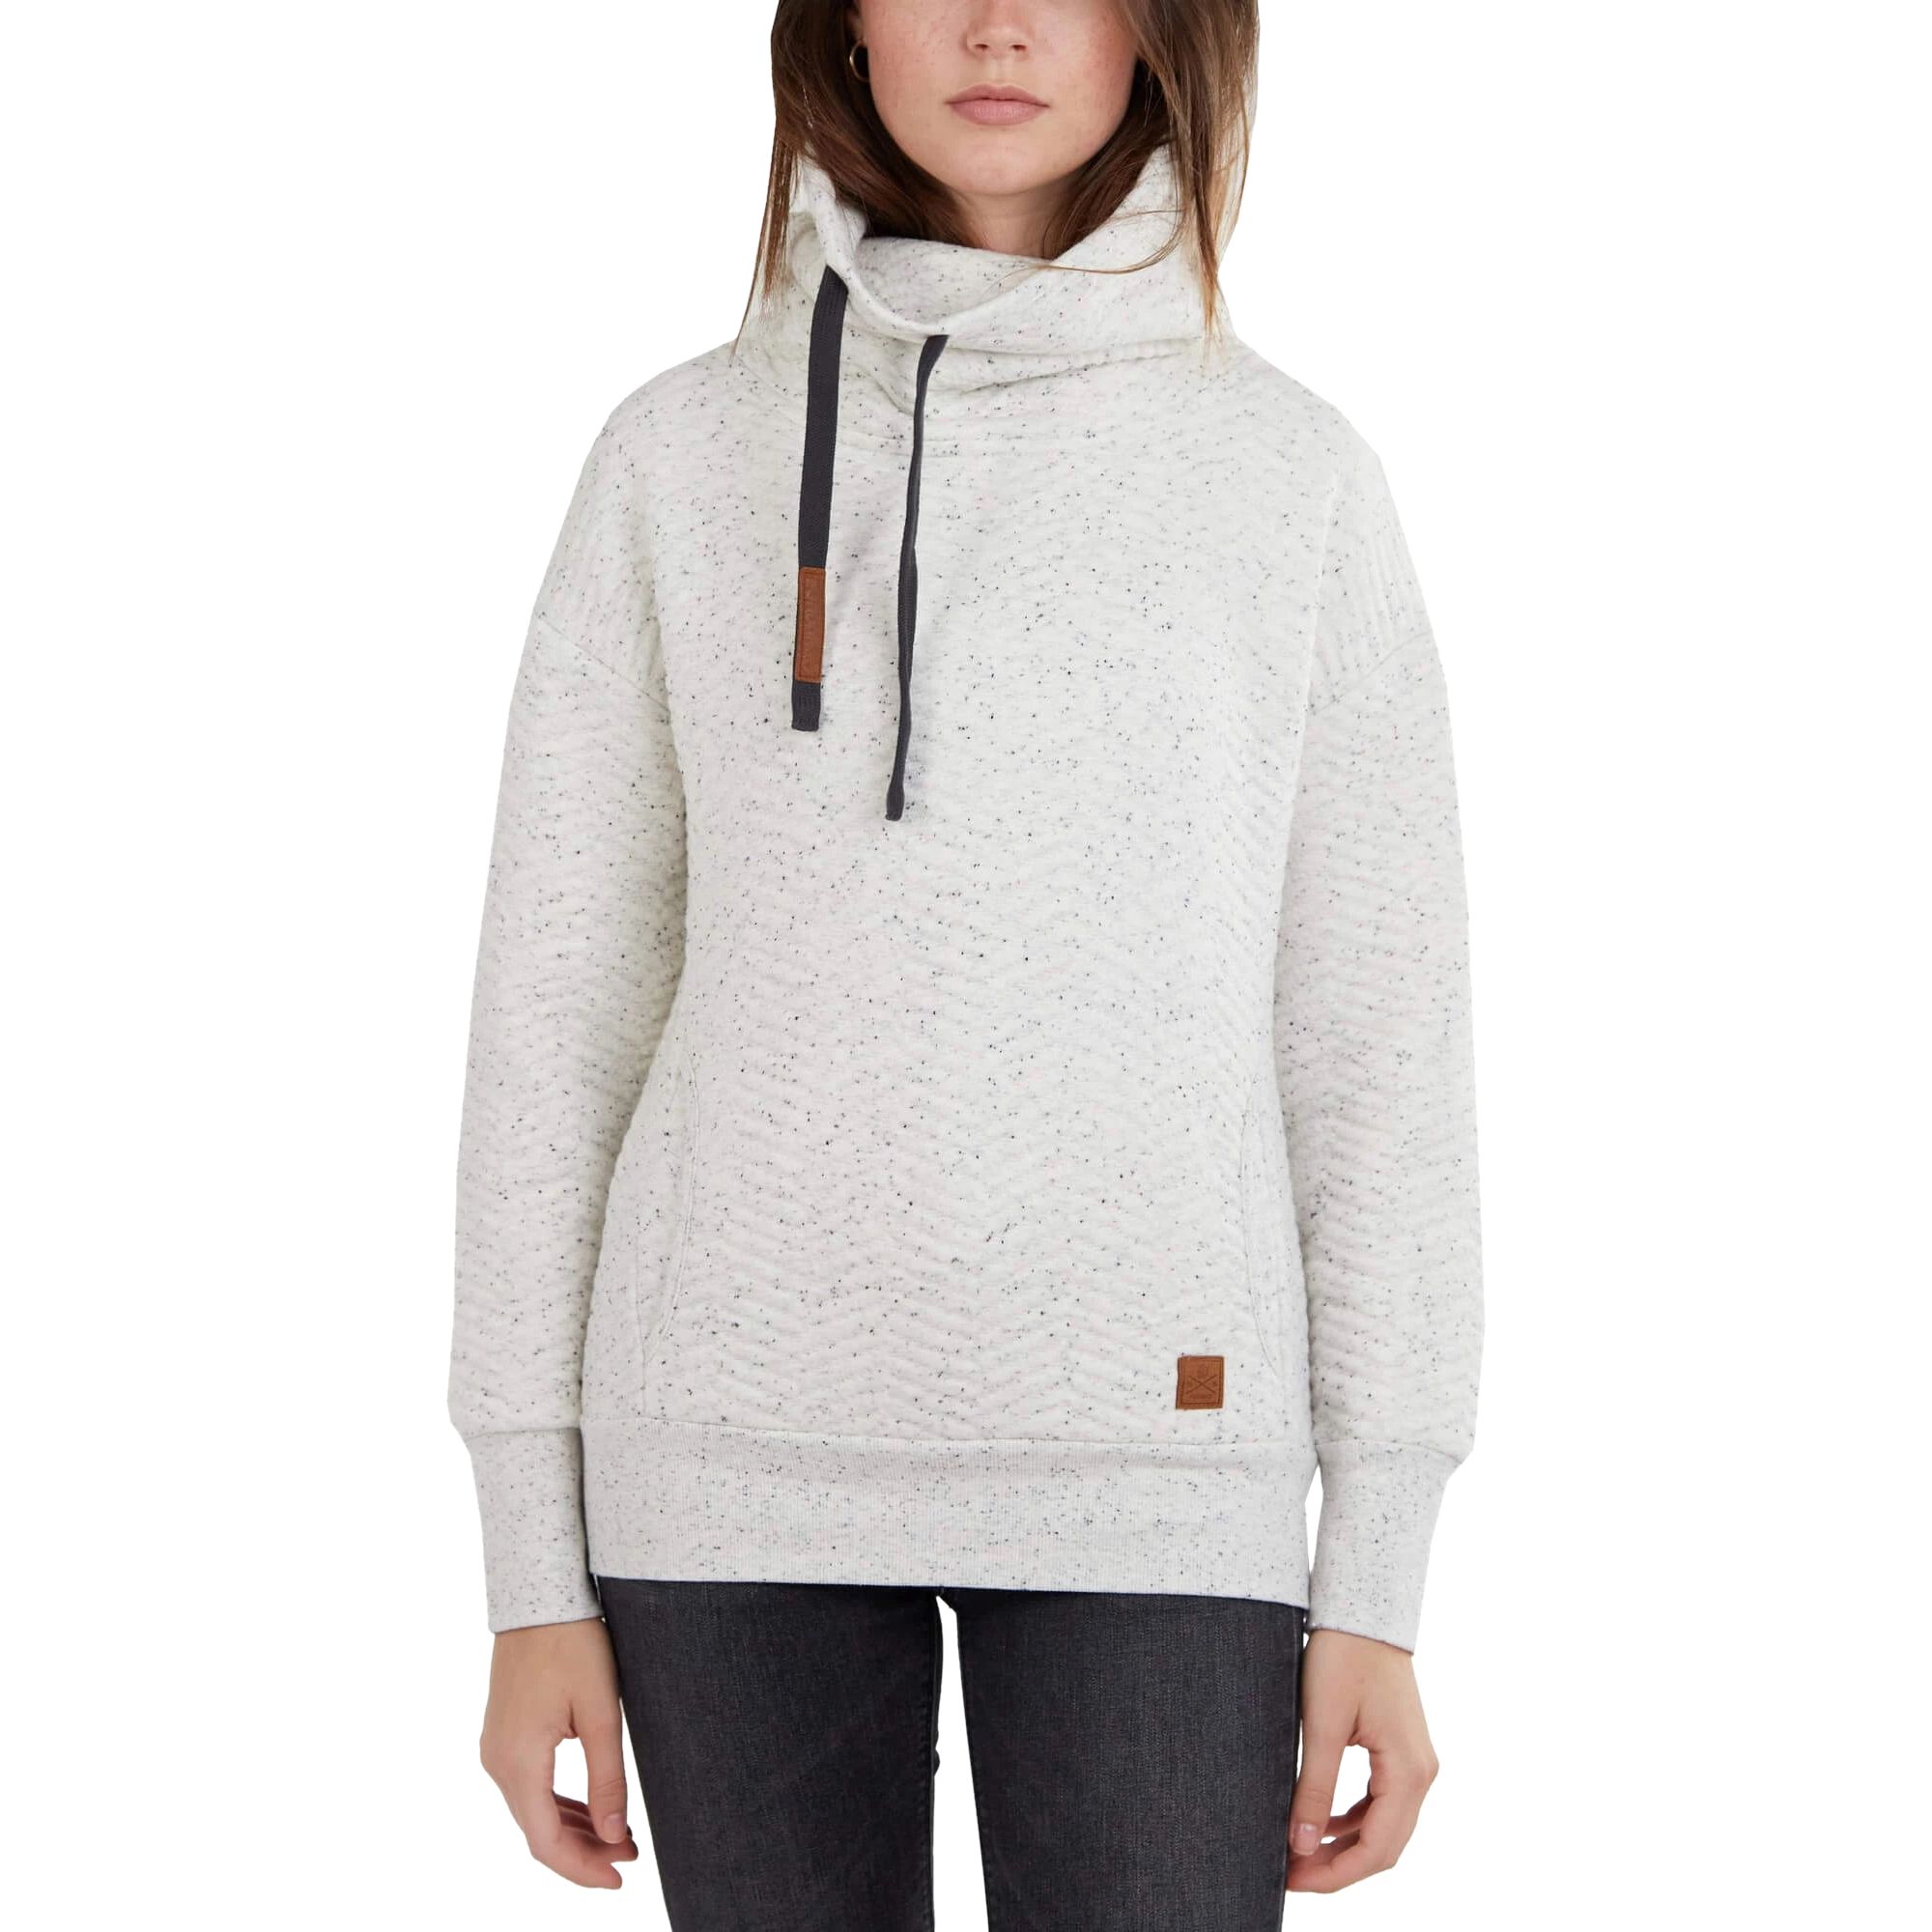 Sweater Aliz Fundango - 3135805